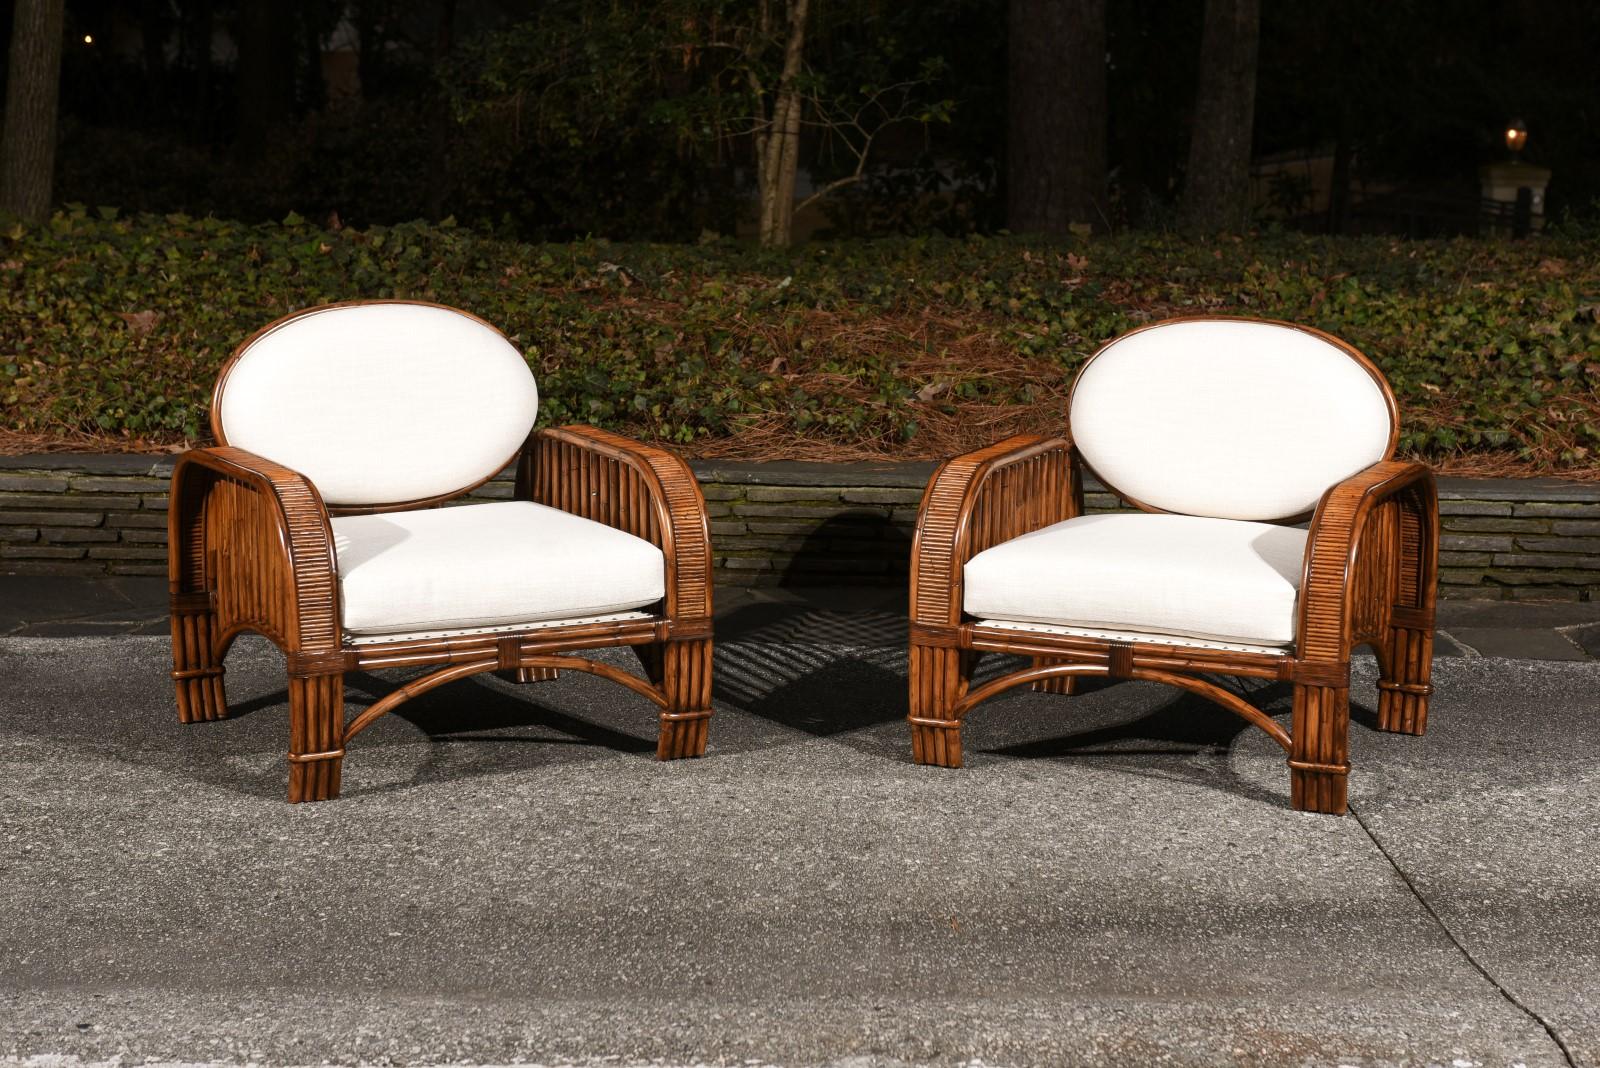 Striking Pair of Art Deco Influenced Club Chairs by Brown Jordan, circa 1980 For Sale 10